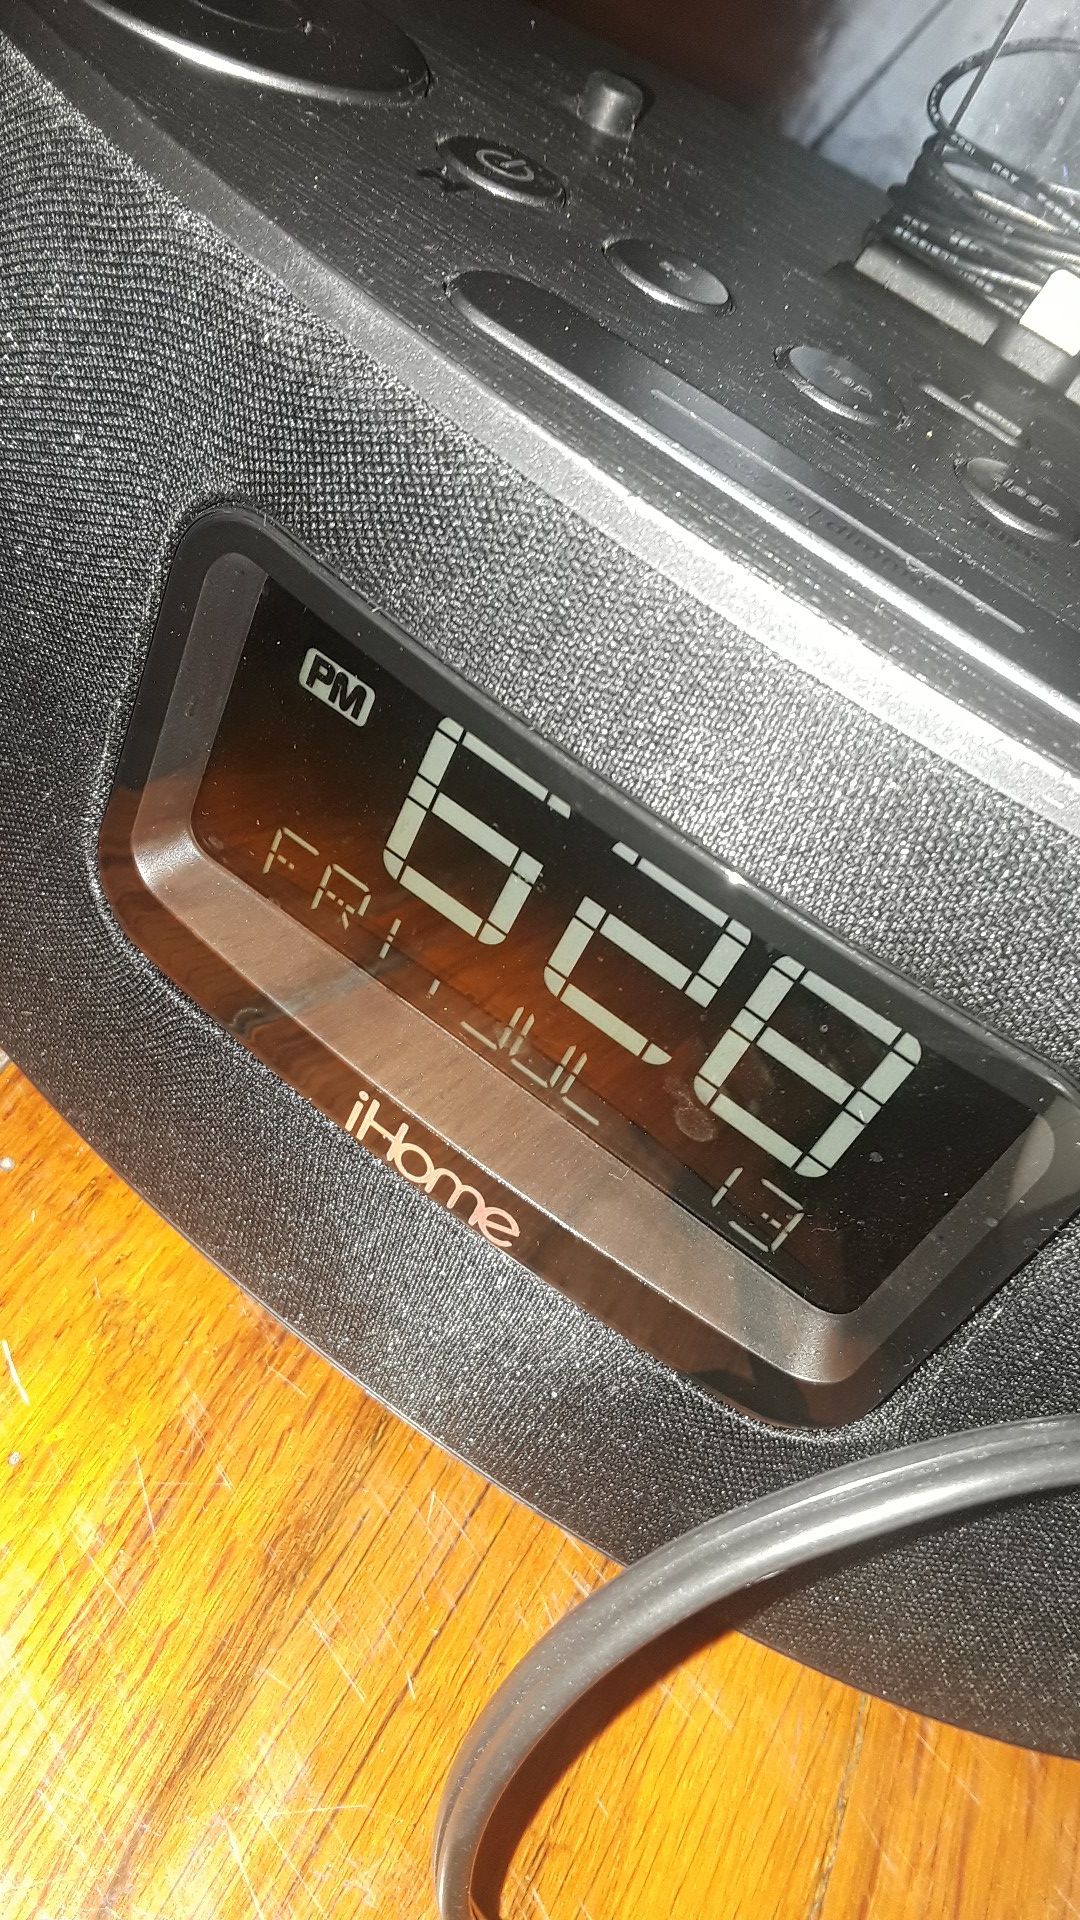 3 alarme clocks